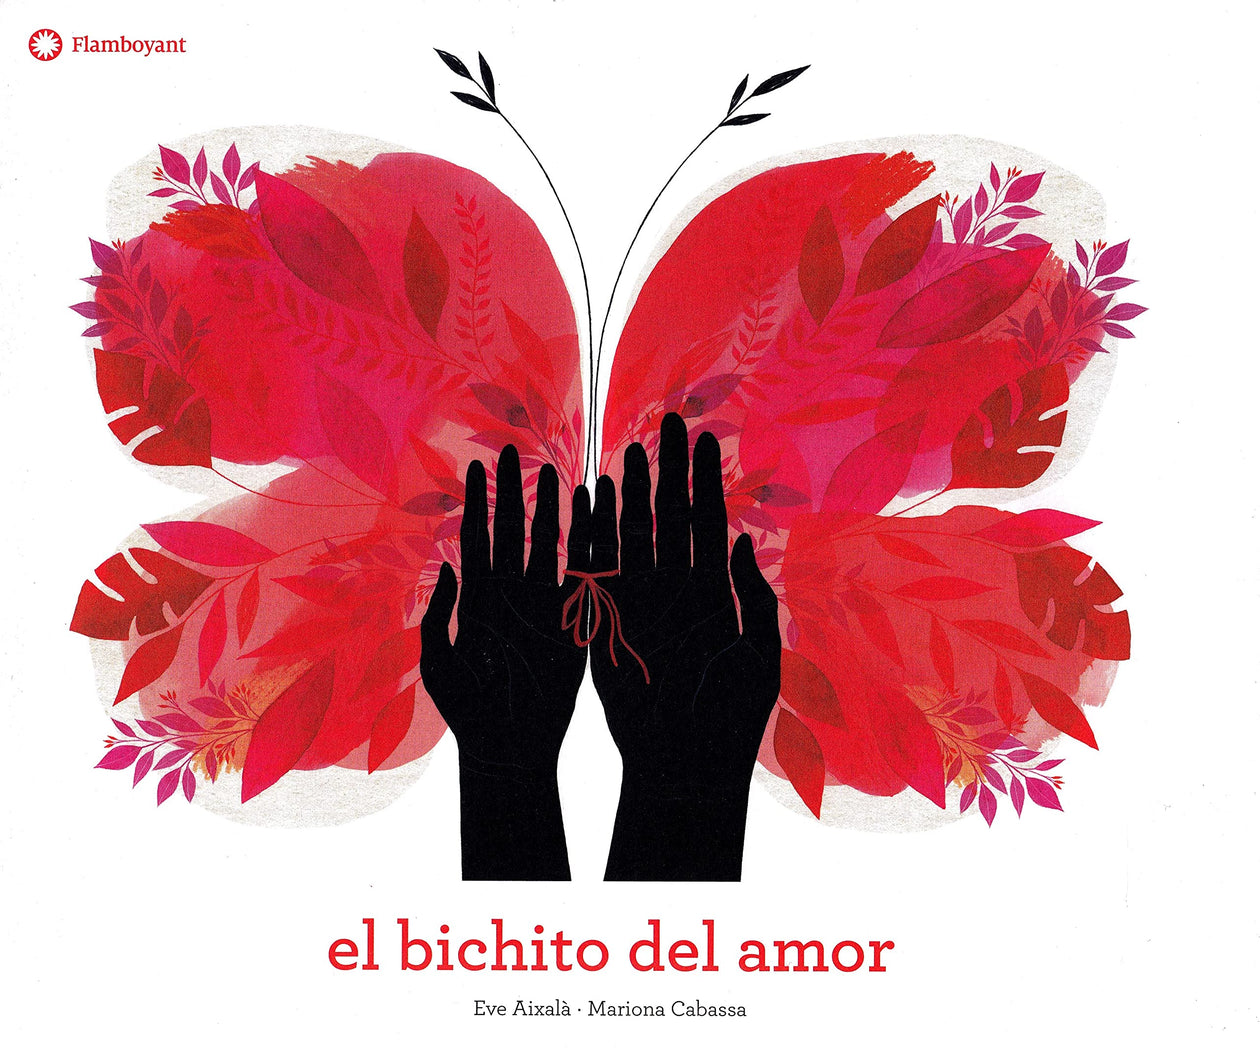 Eve Aixalà: El bichito del amor, illustrated by Mariona Cabassa